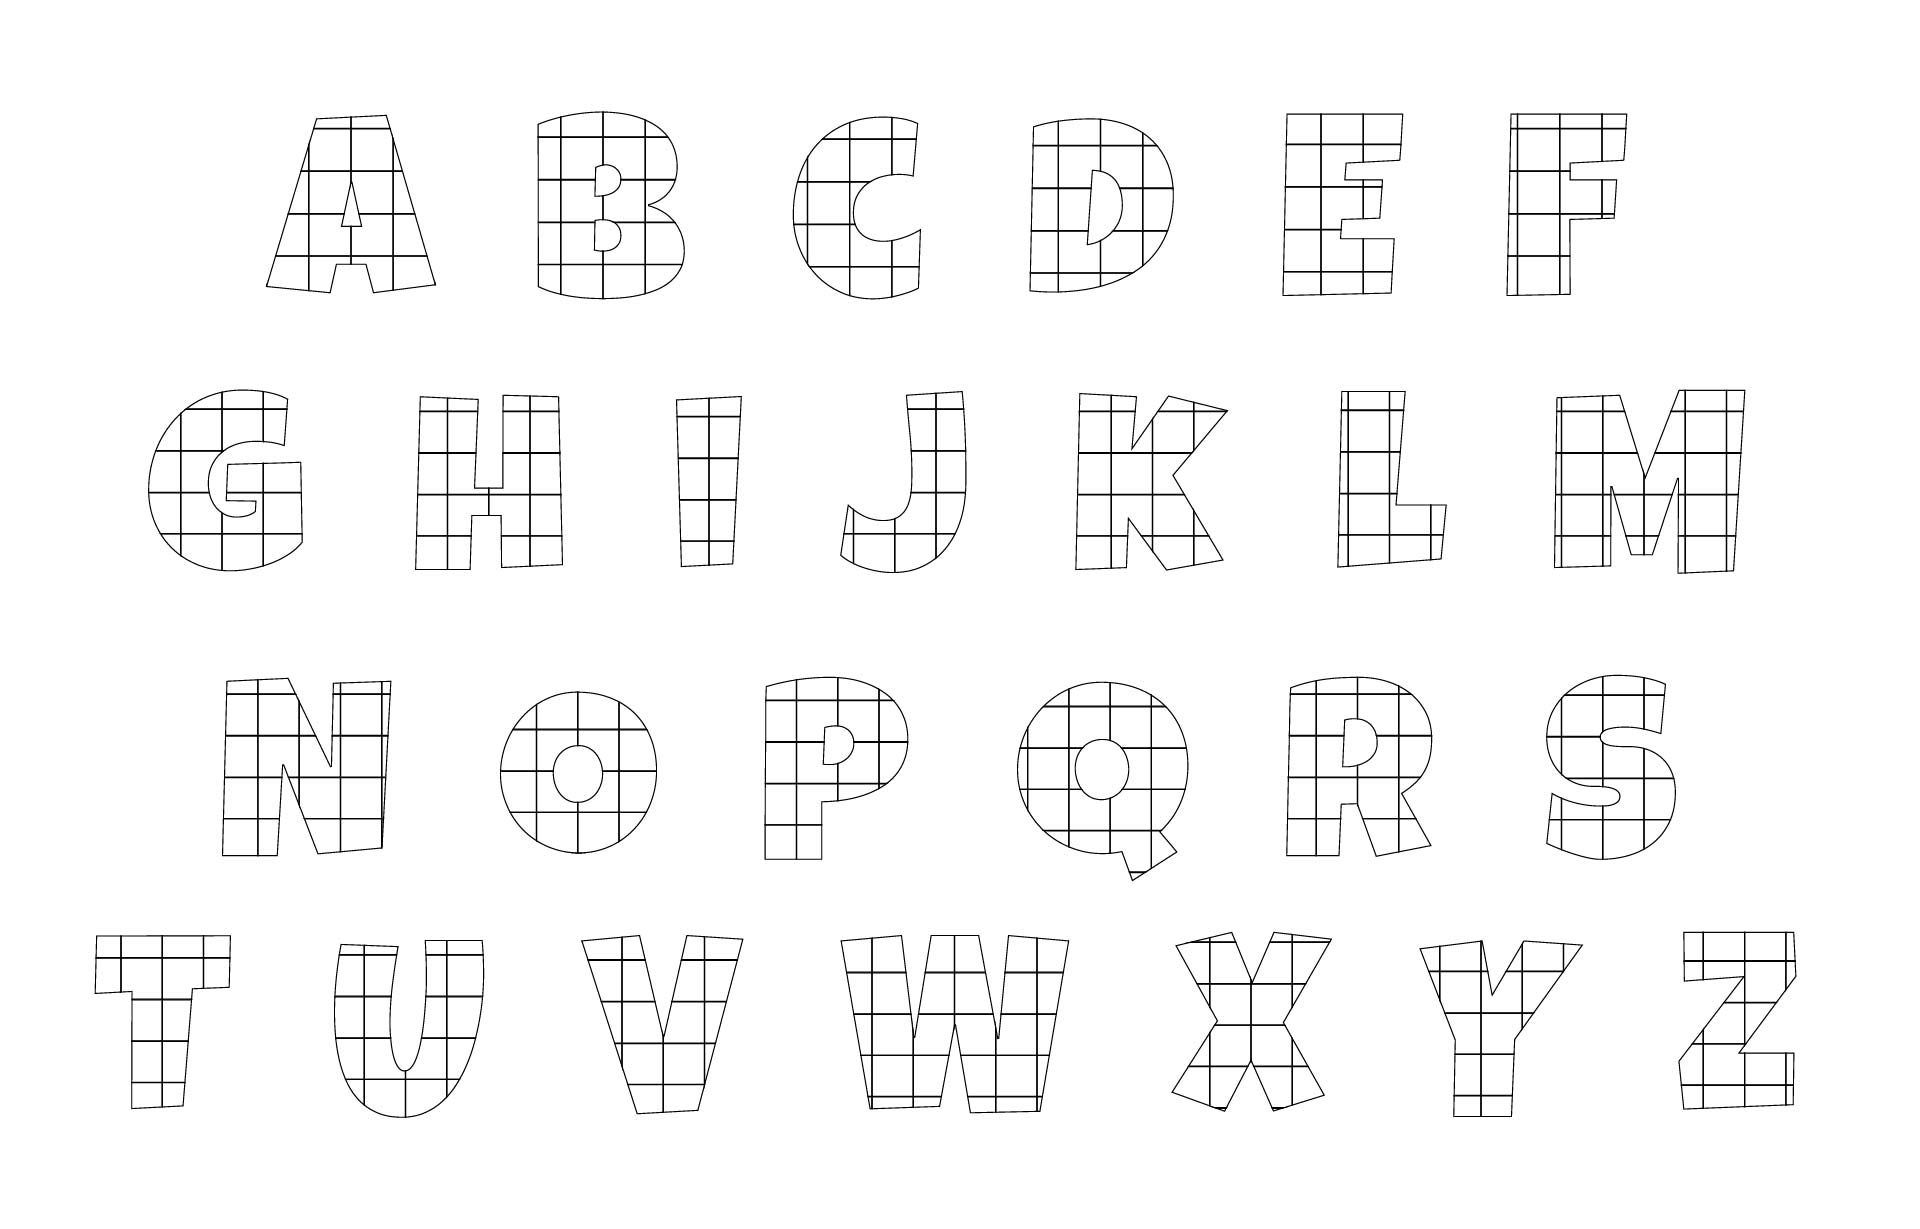 4-best-images-of-printable-alphabet-block-letter-large-size-large-printable-letter-stencils